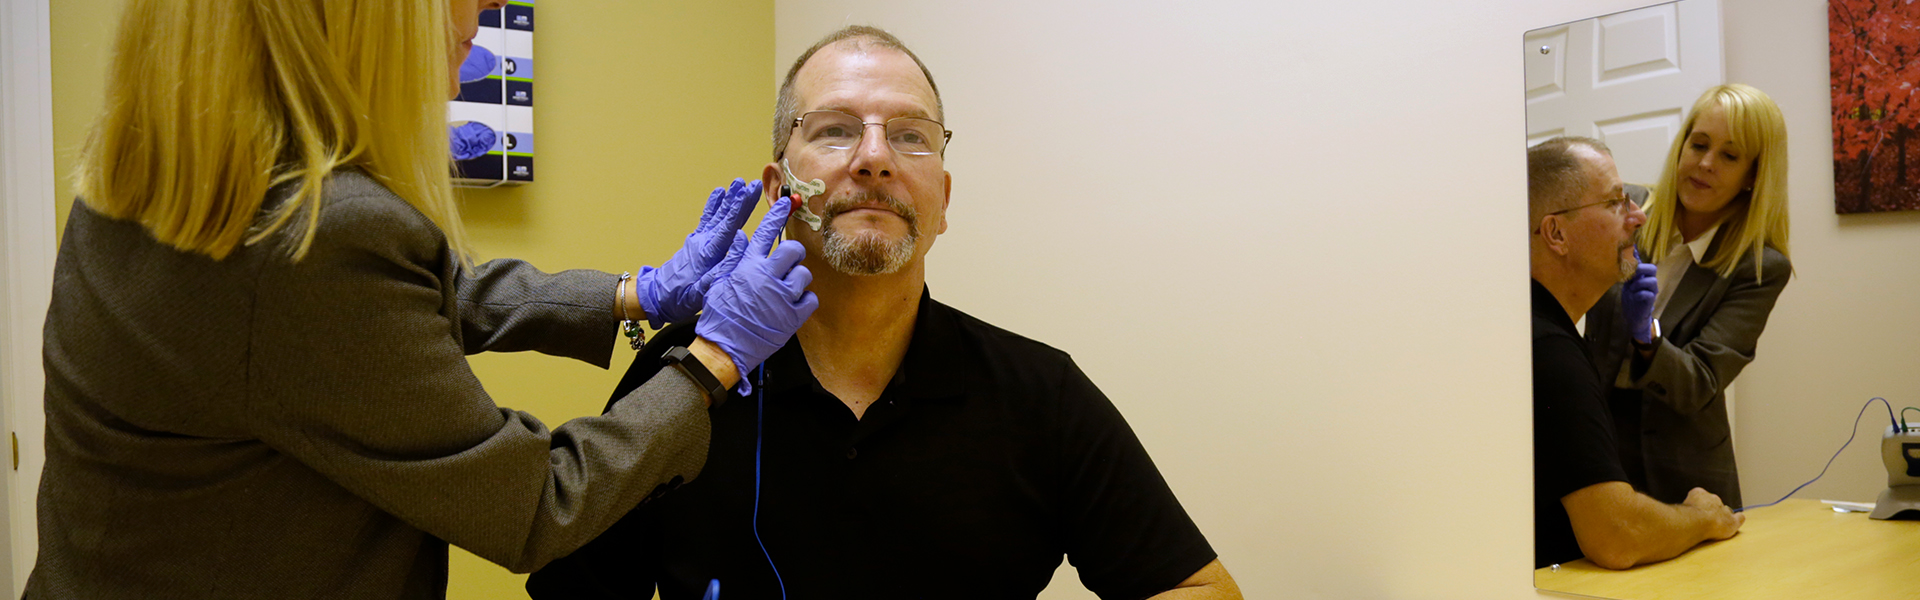 Faulkner University Pathologist performing an hearing exam